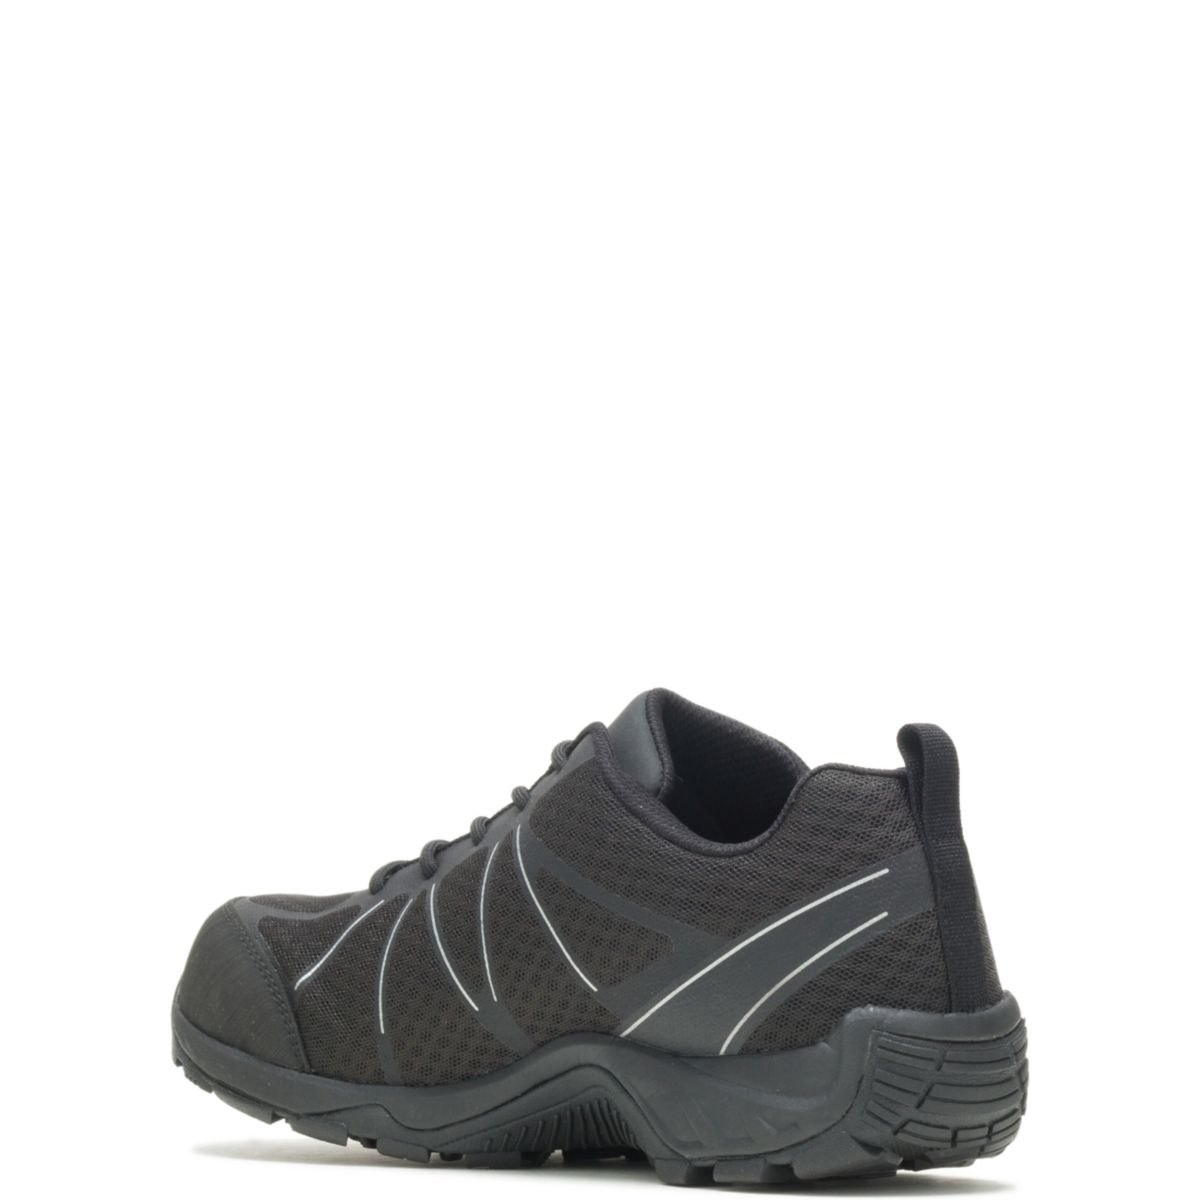 WOLVERINE Men's Amherst II CarbonMAXÂ® Composite Toe Work Shoe Black - W201147 BLACK - BLACK, 9.5